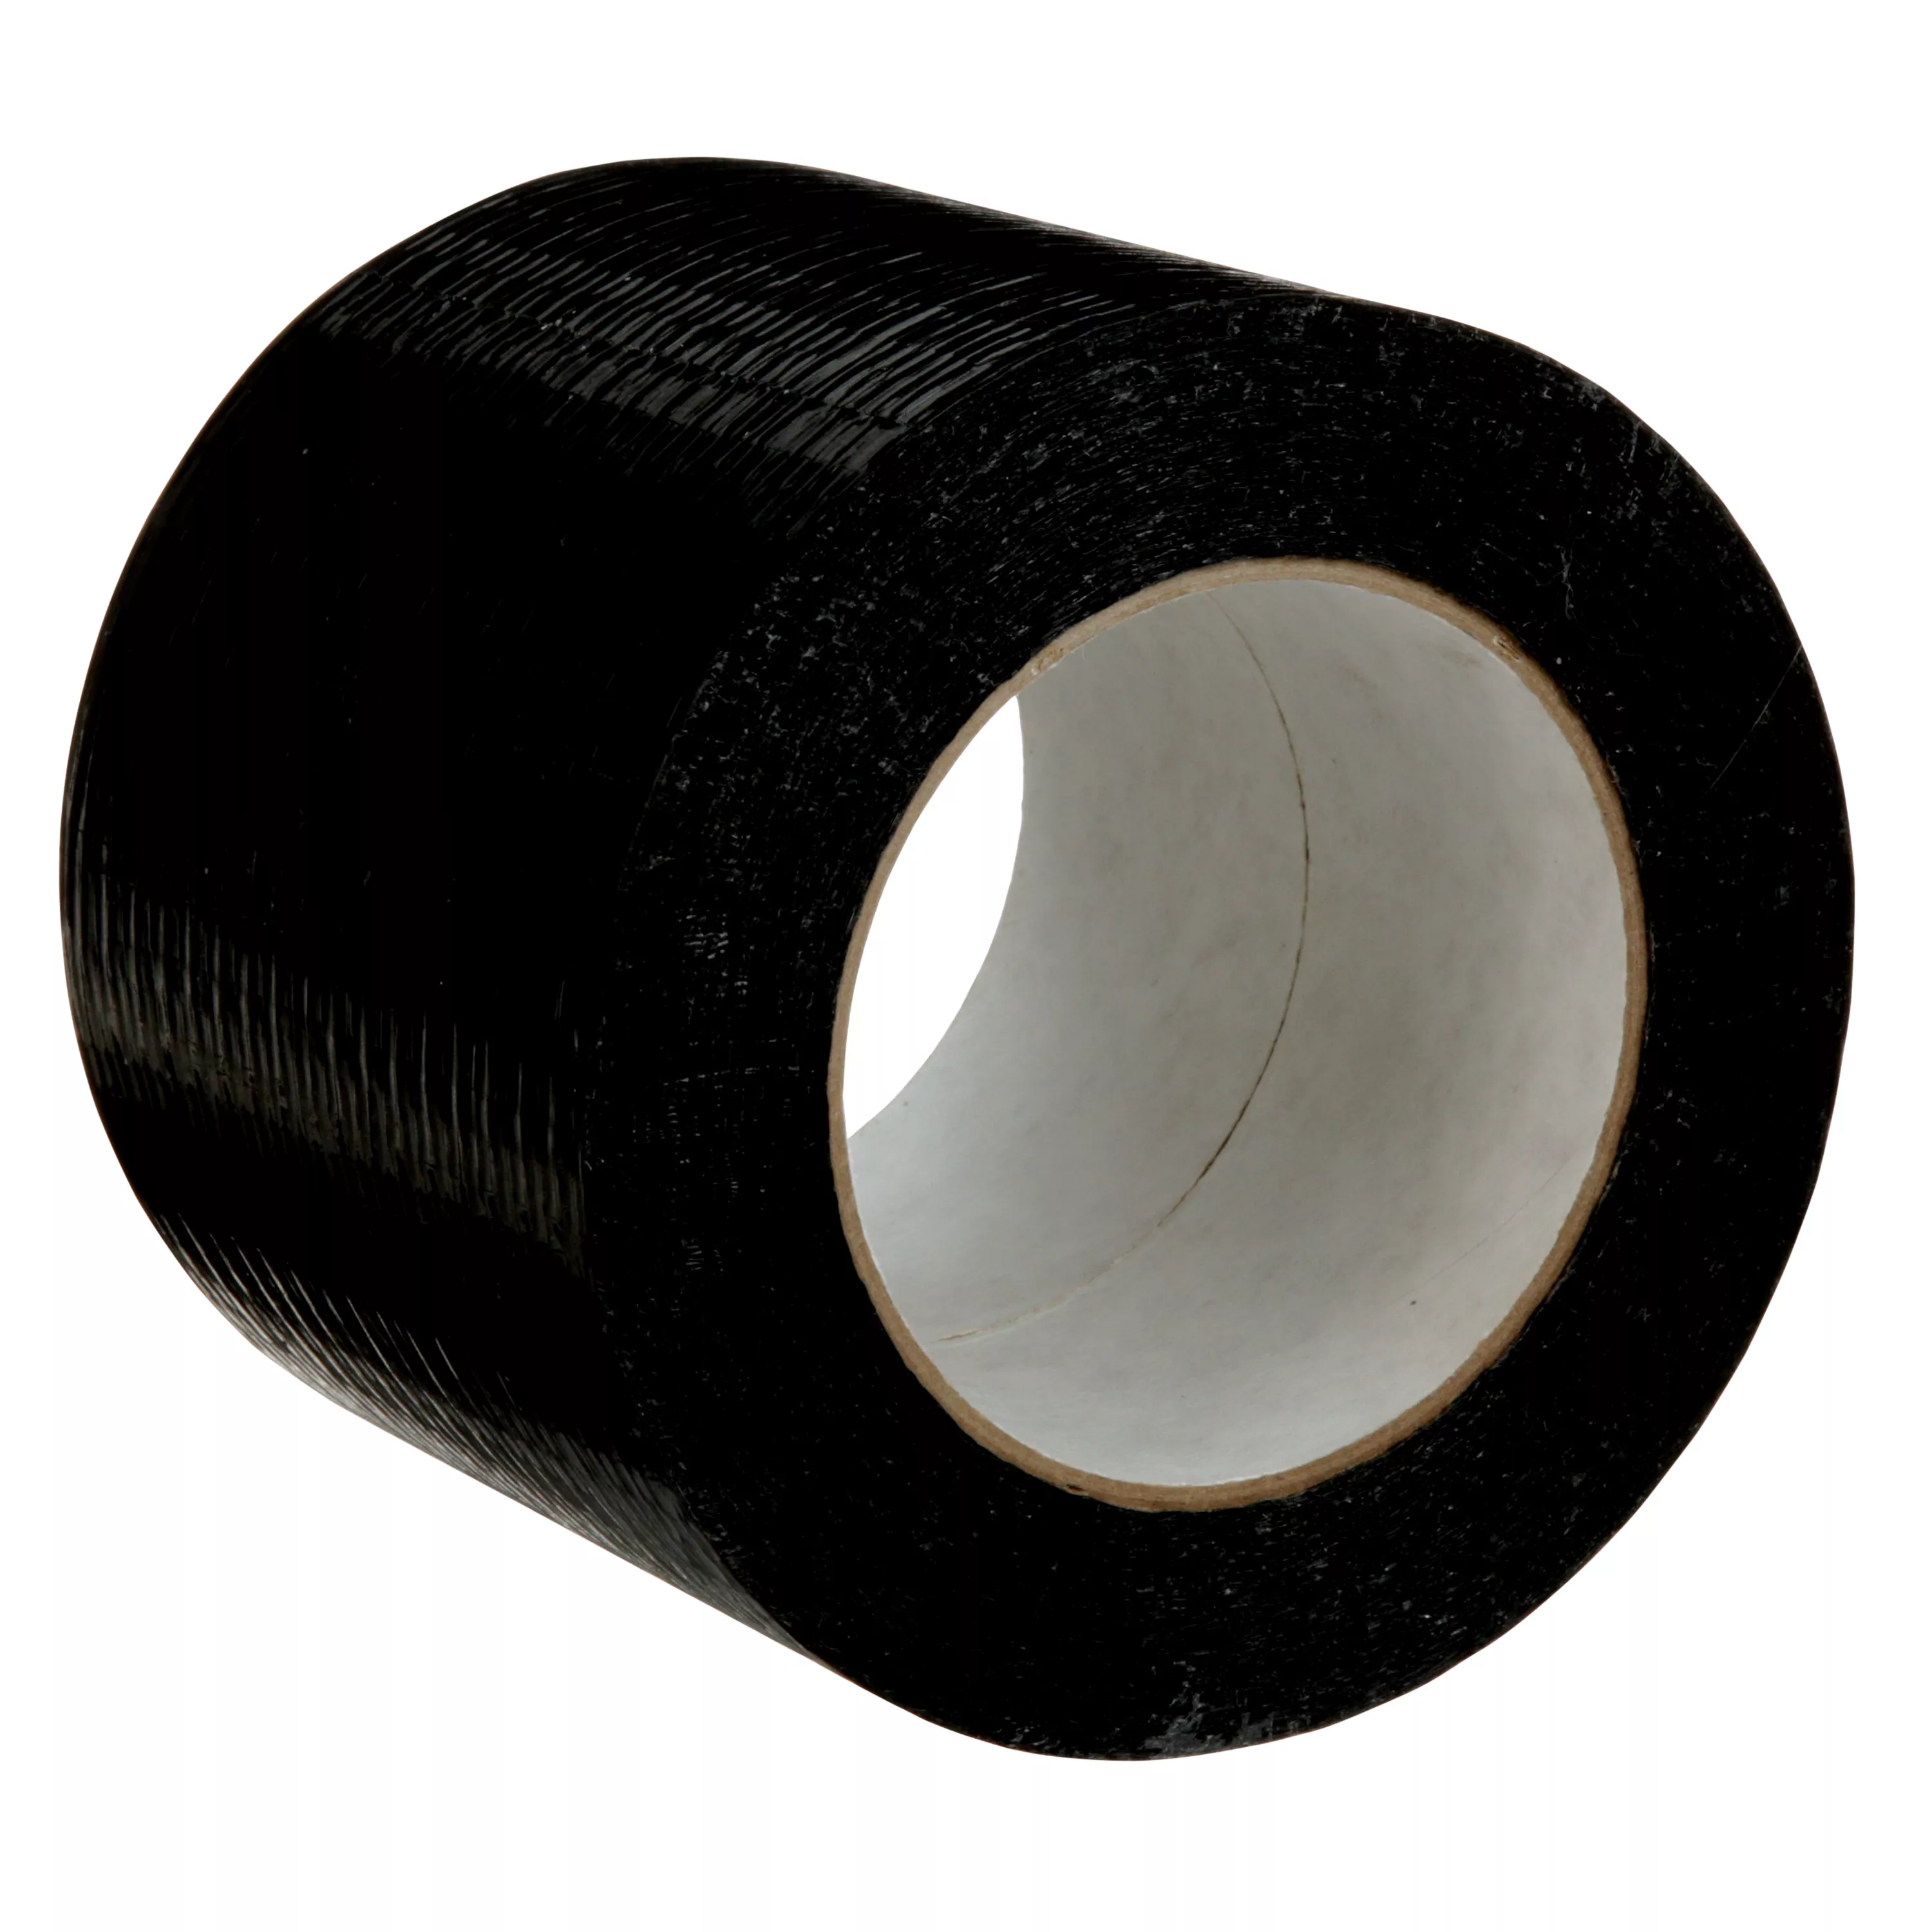 3M™ Woven Patch Tape 442B, Black, 99 mm x 50 m, 15 Rolls/Case